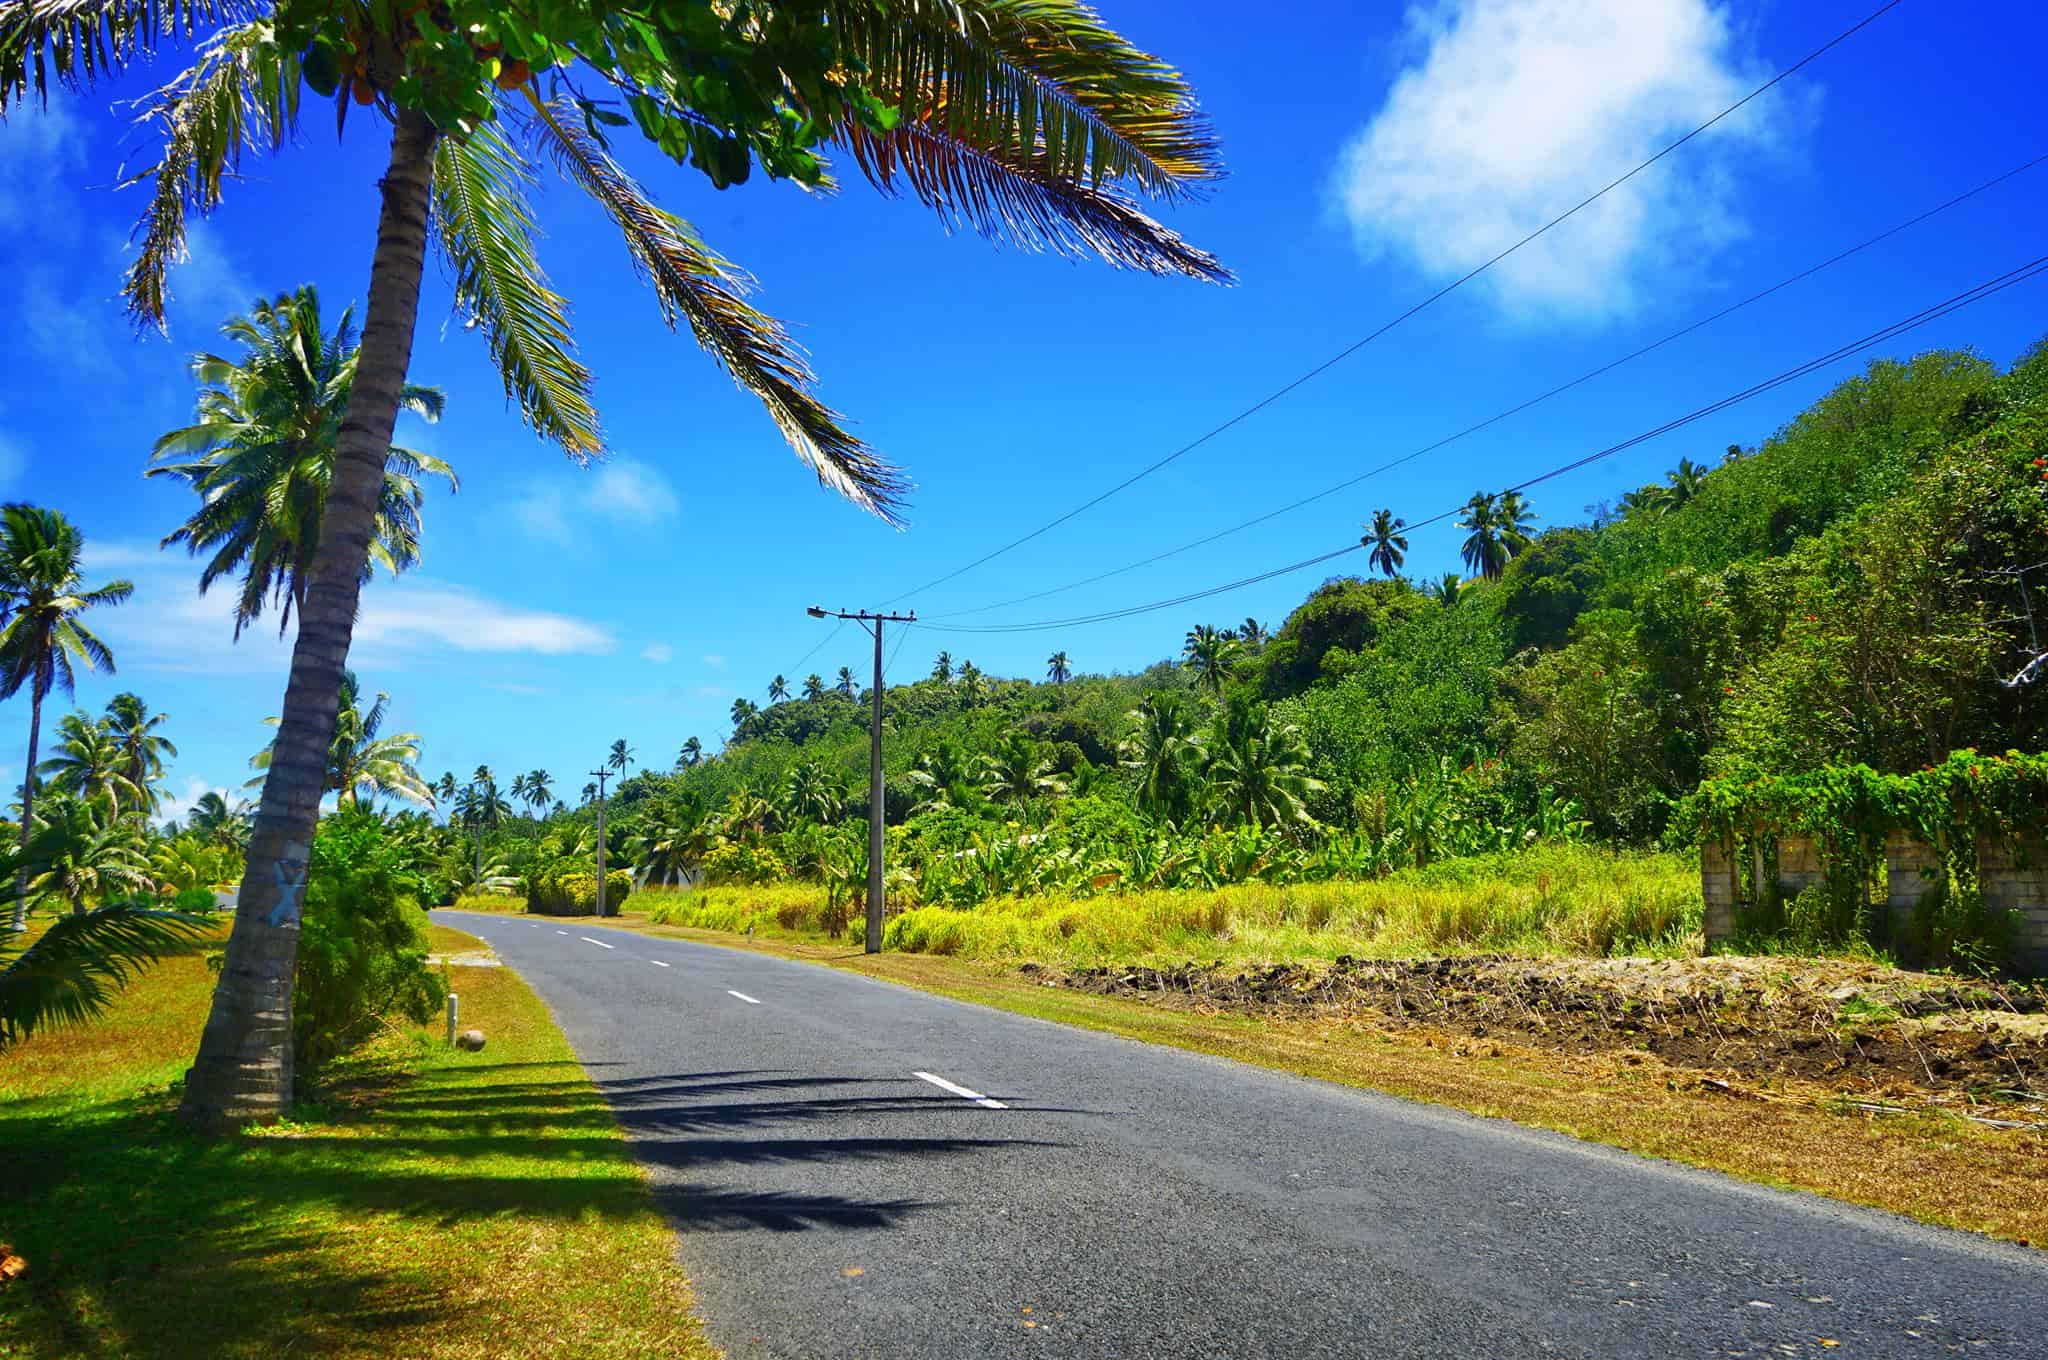 The road on Aitutaki